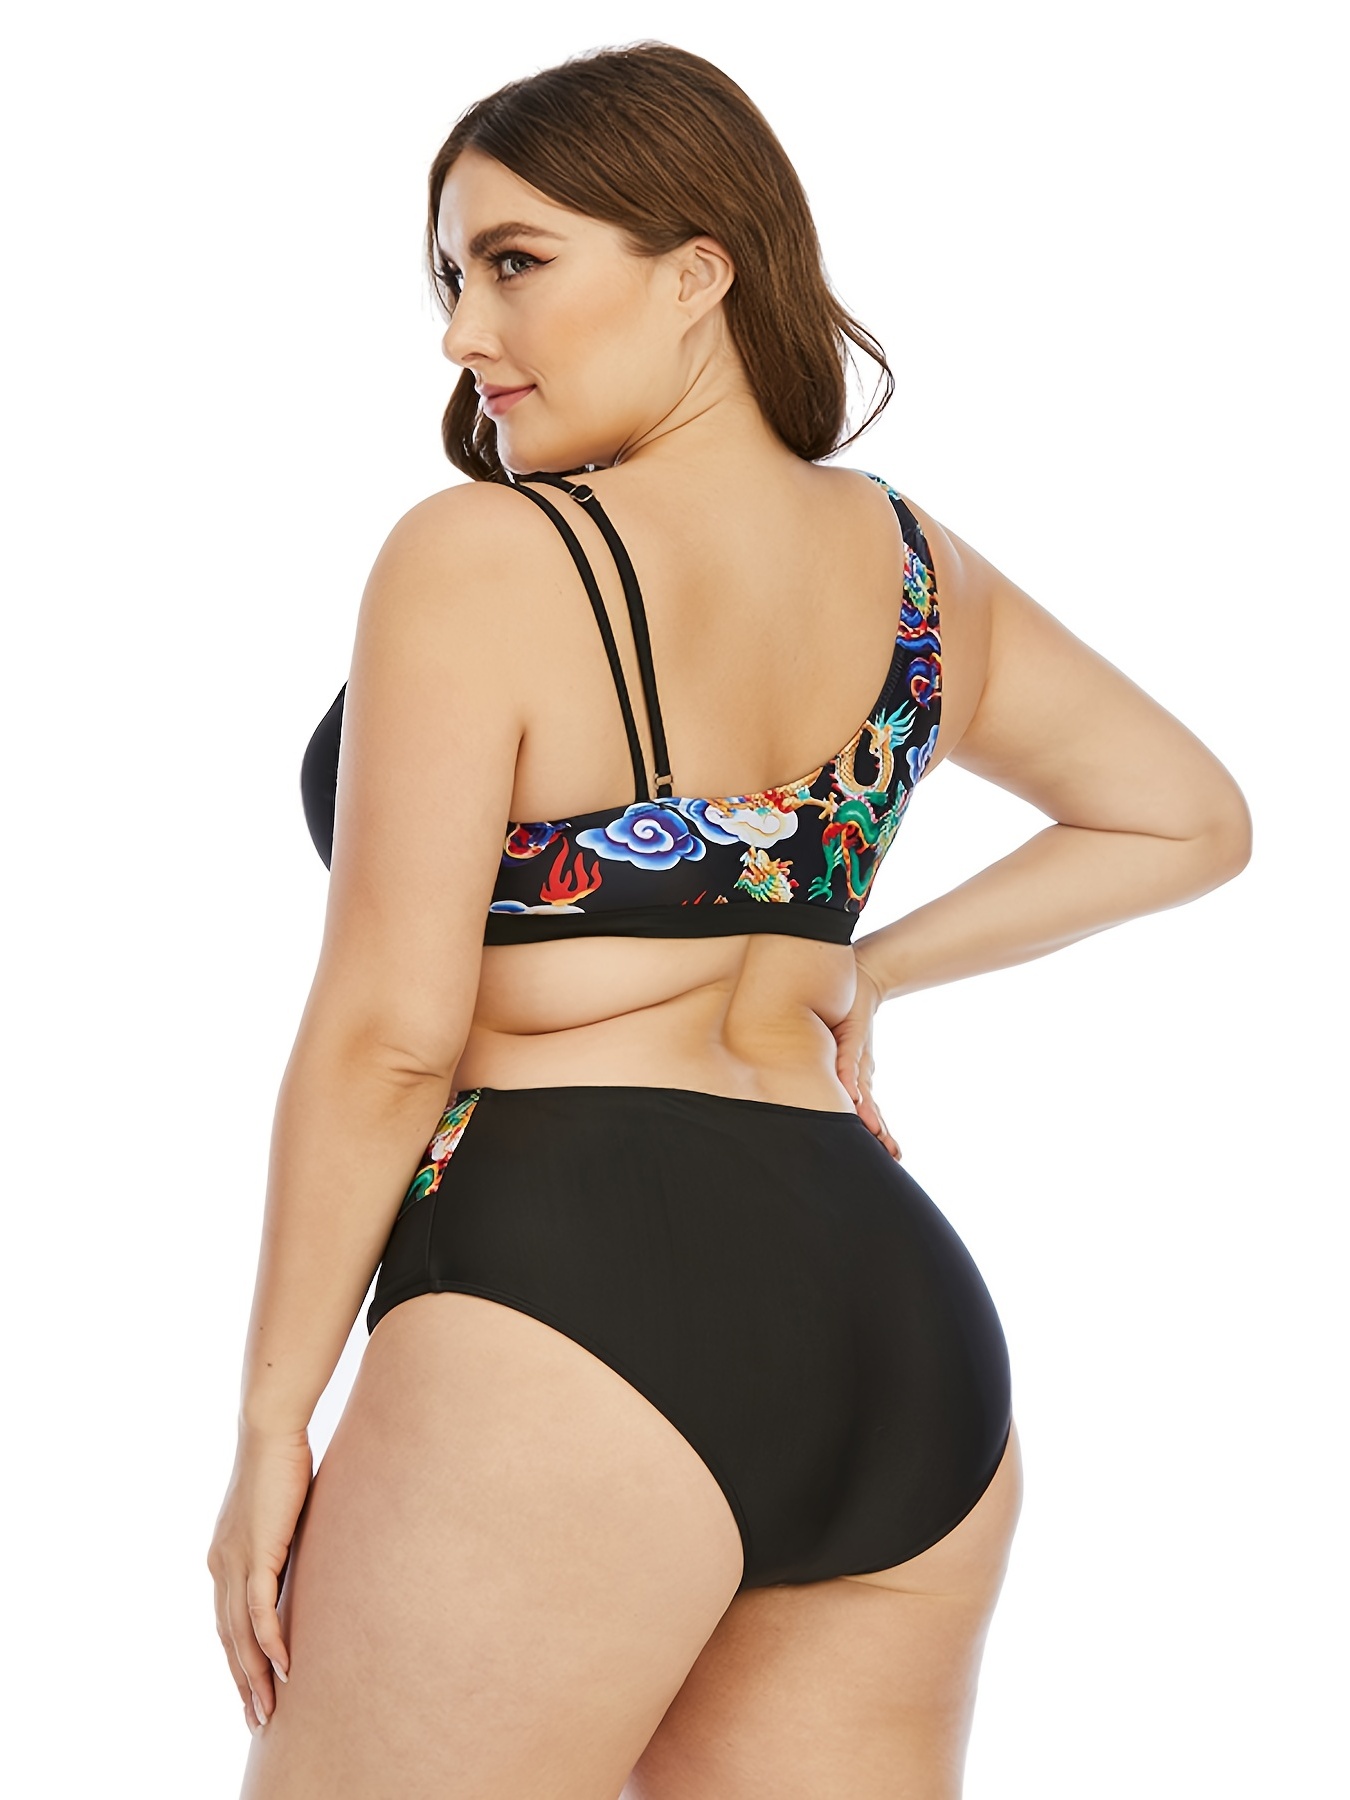 Plus Size One-Piece Swimsuit for Women, Multicolor Print, No Bra Underwire,  Support, Summer Swimwear